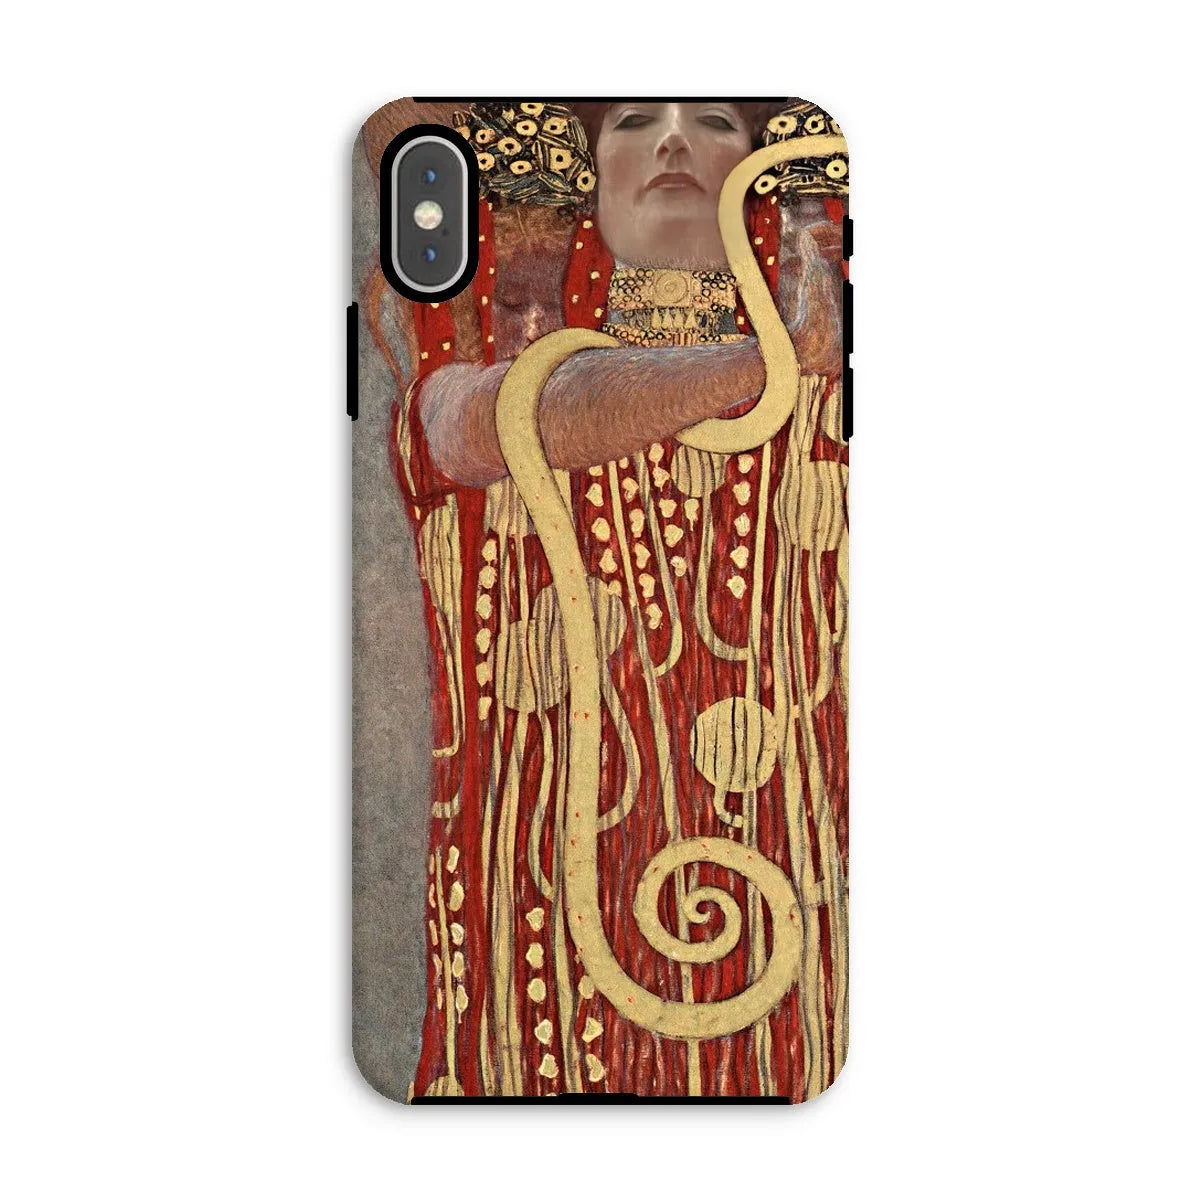 Hygieia - Vienna Succession Phone Case - Gustav Klimt - Iphone Xs Max / Matte - Mobile Phone Cases - Aesthetic Art